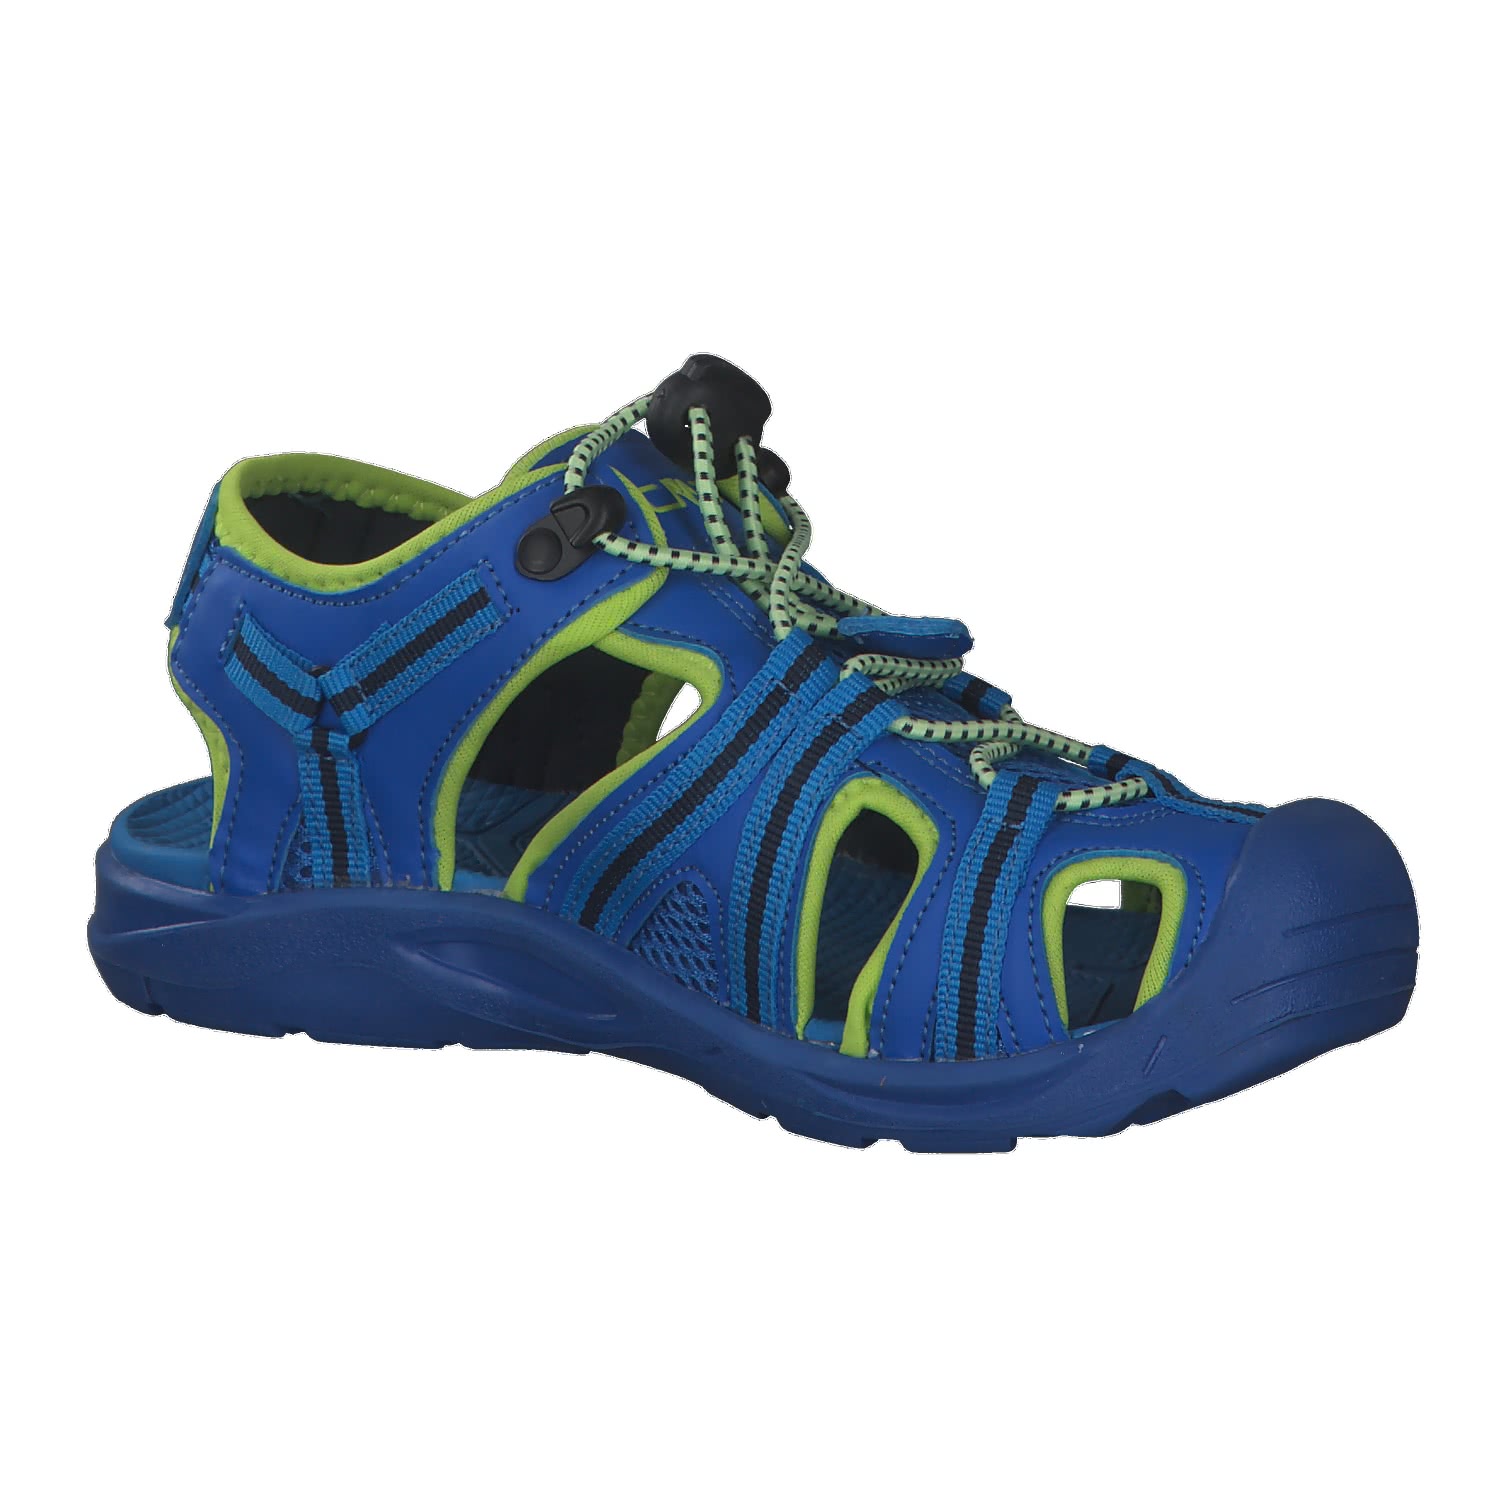 Kinder Sandal Aquarii | 2.0 Sandale eBay Hiking CMP 30Q9664